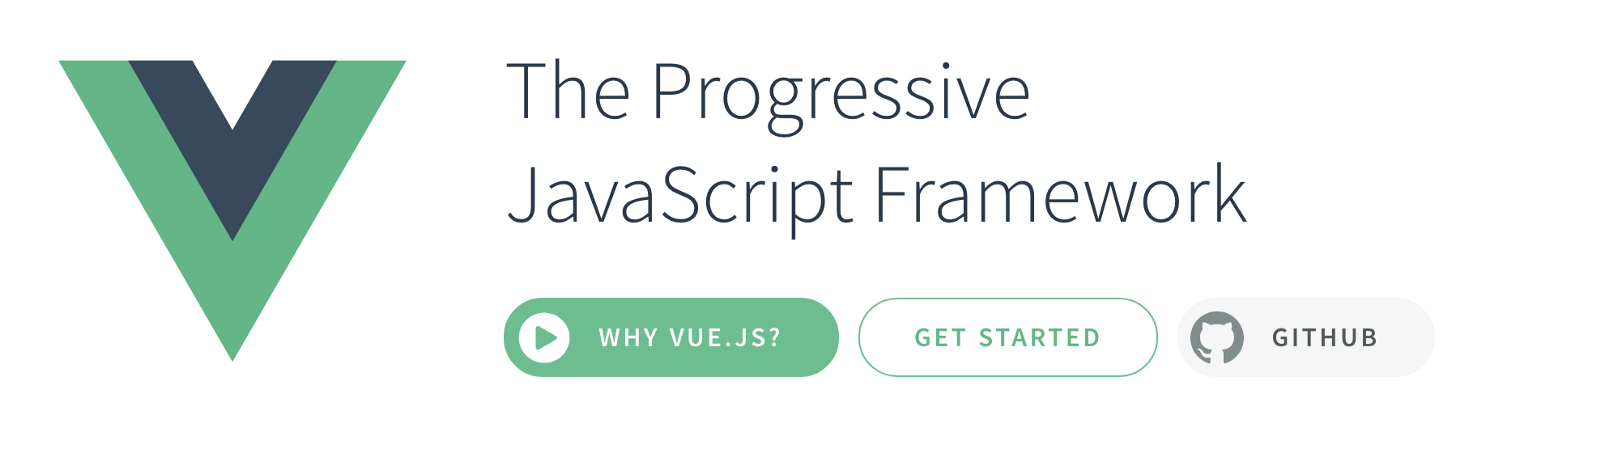 Vue header: The Progressive JavaScript Framework